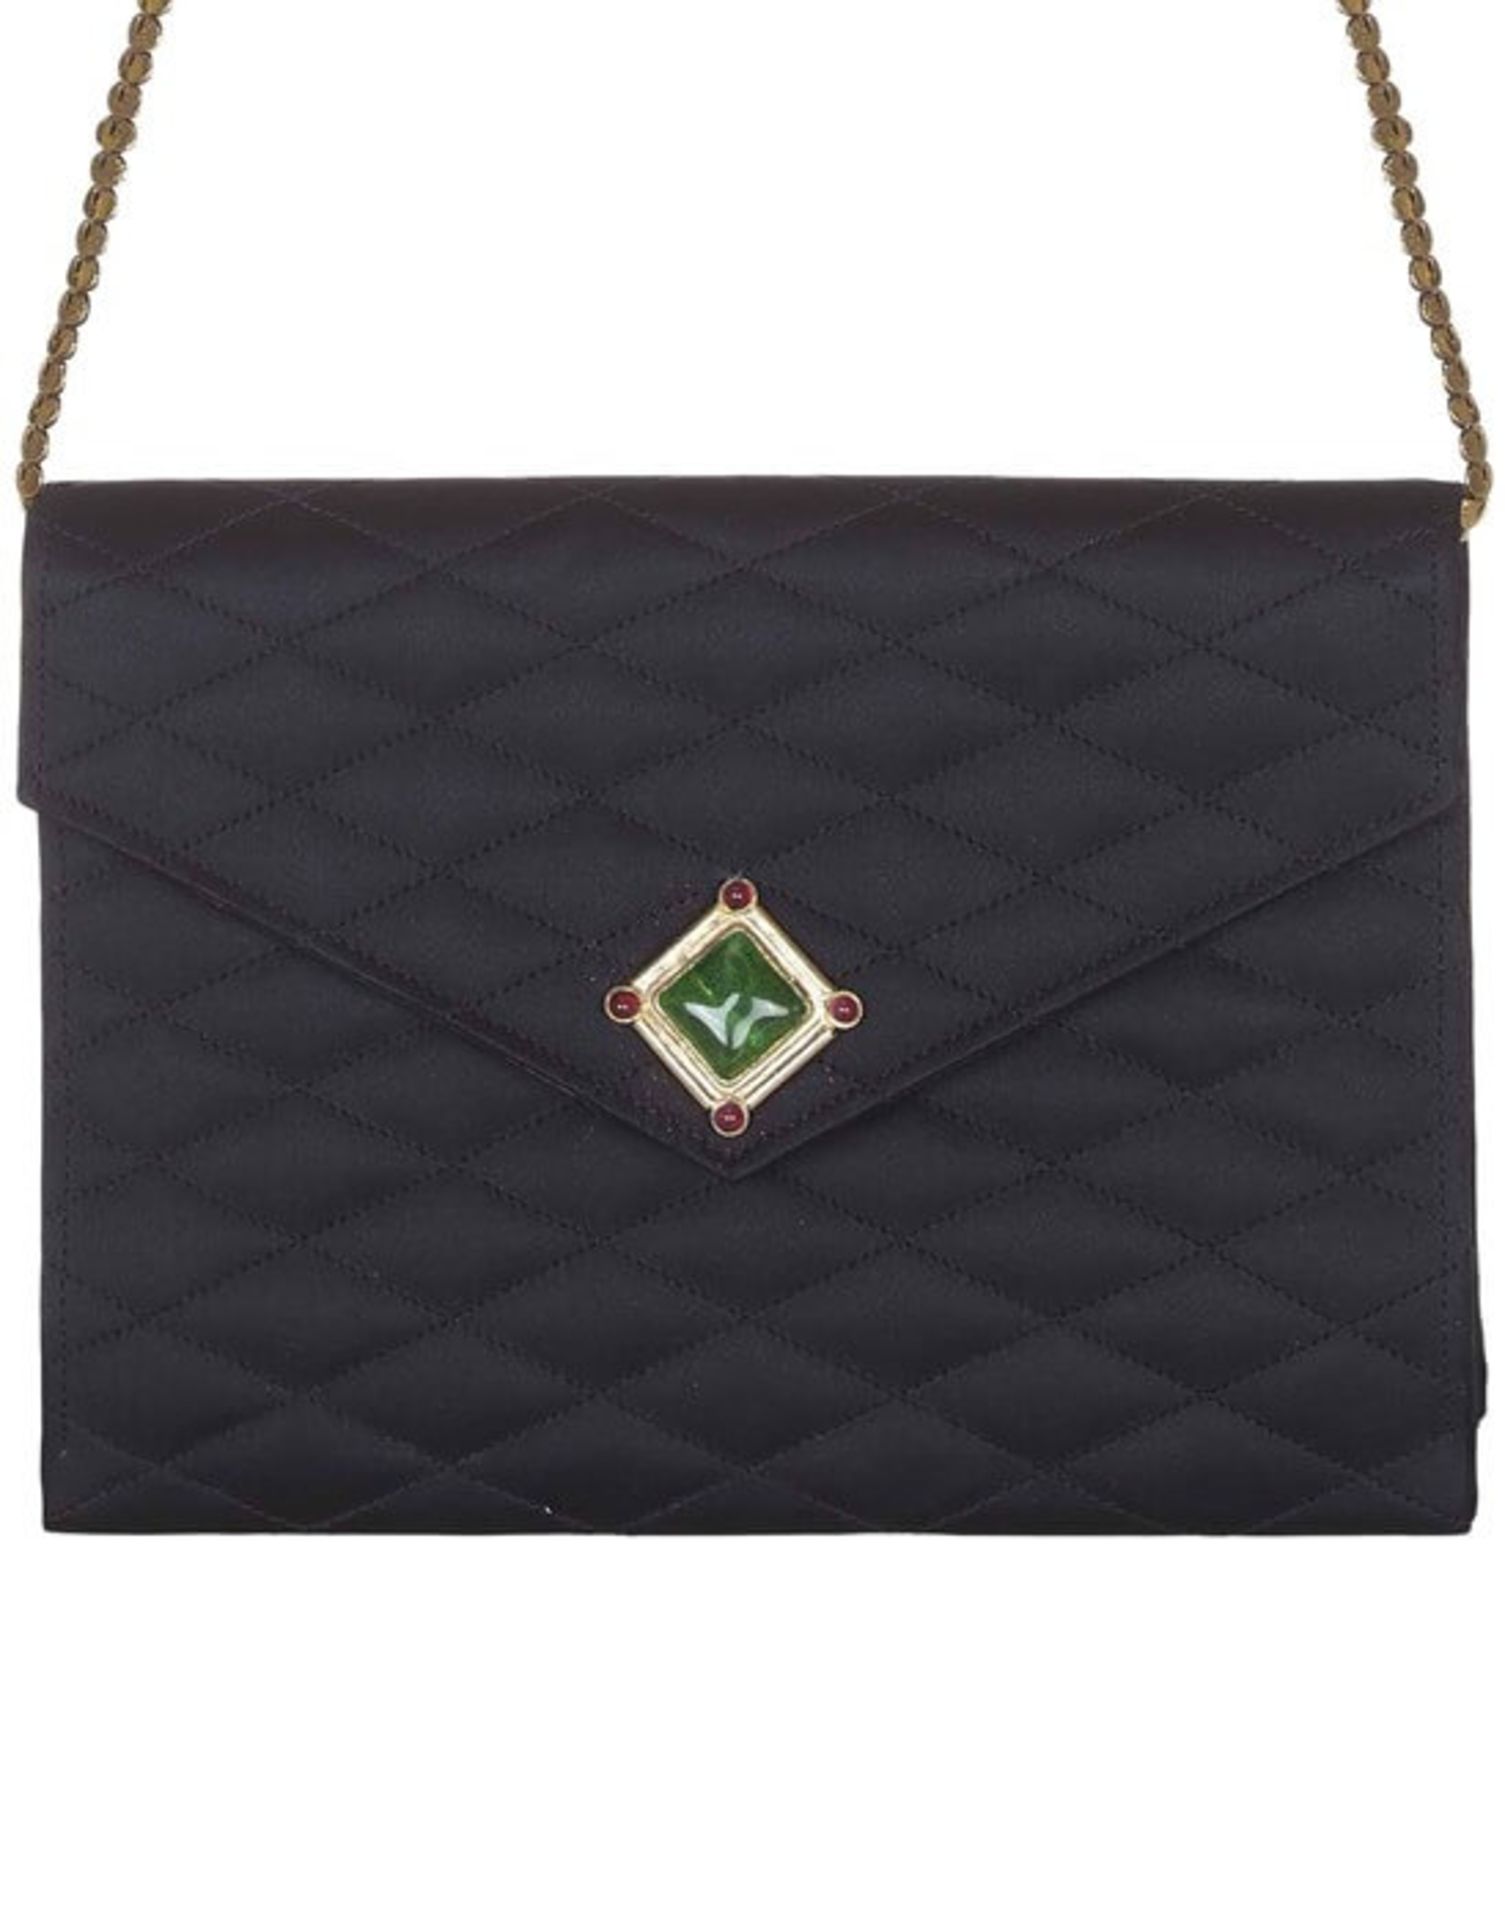 1980s Chanel Black Satin Bag - Image 2 of 5